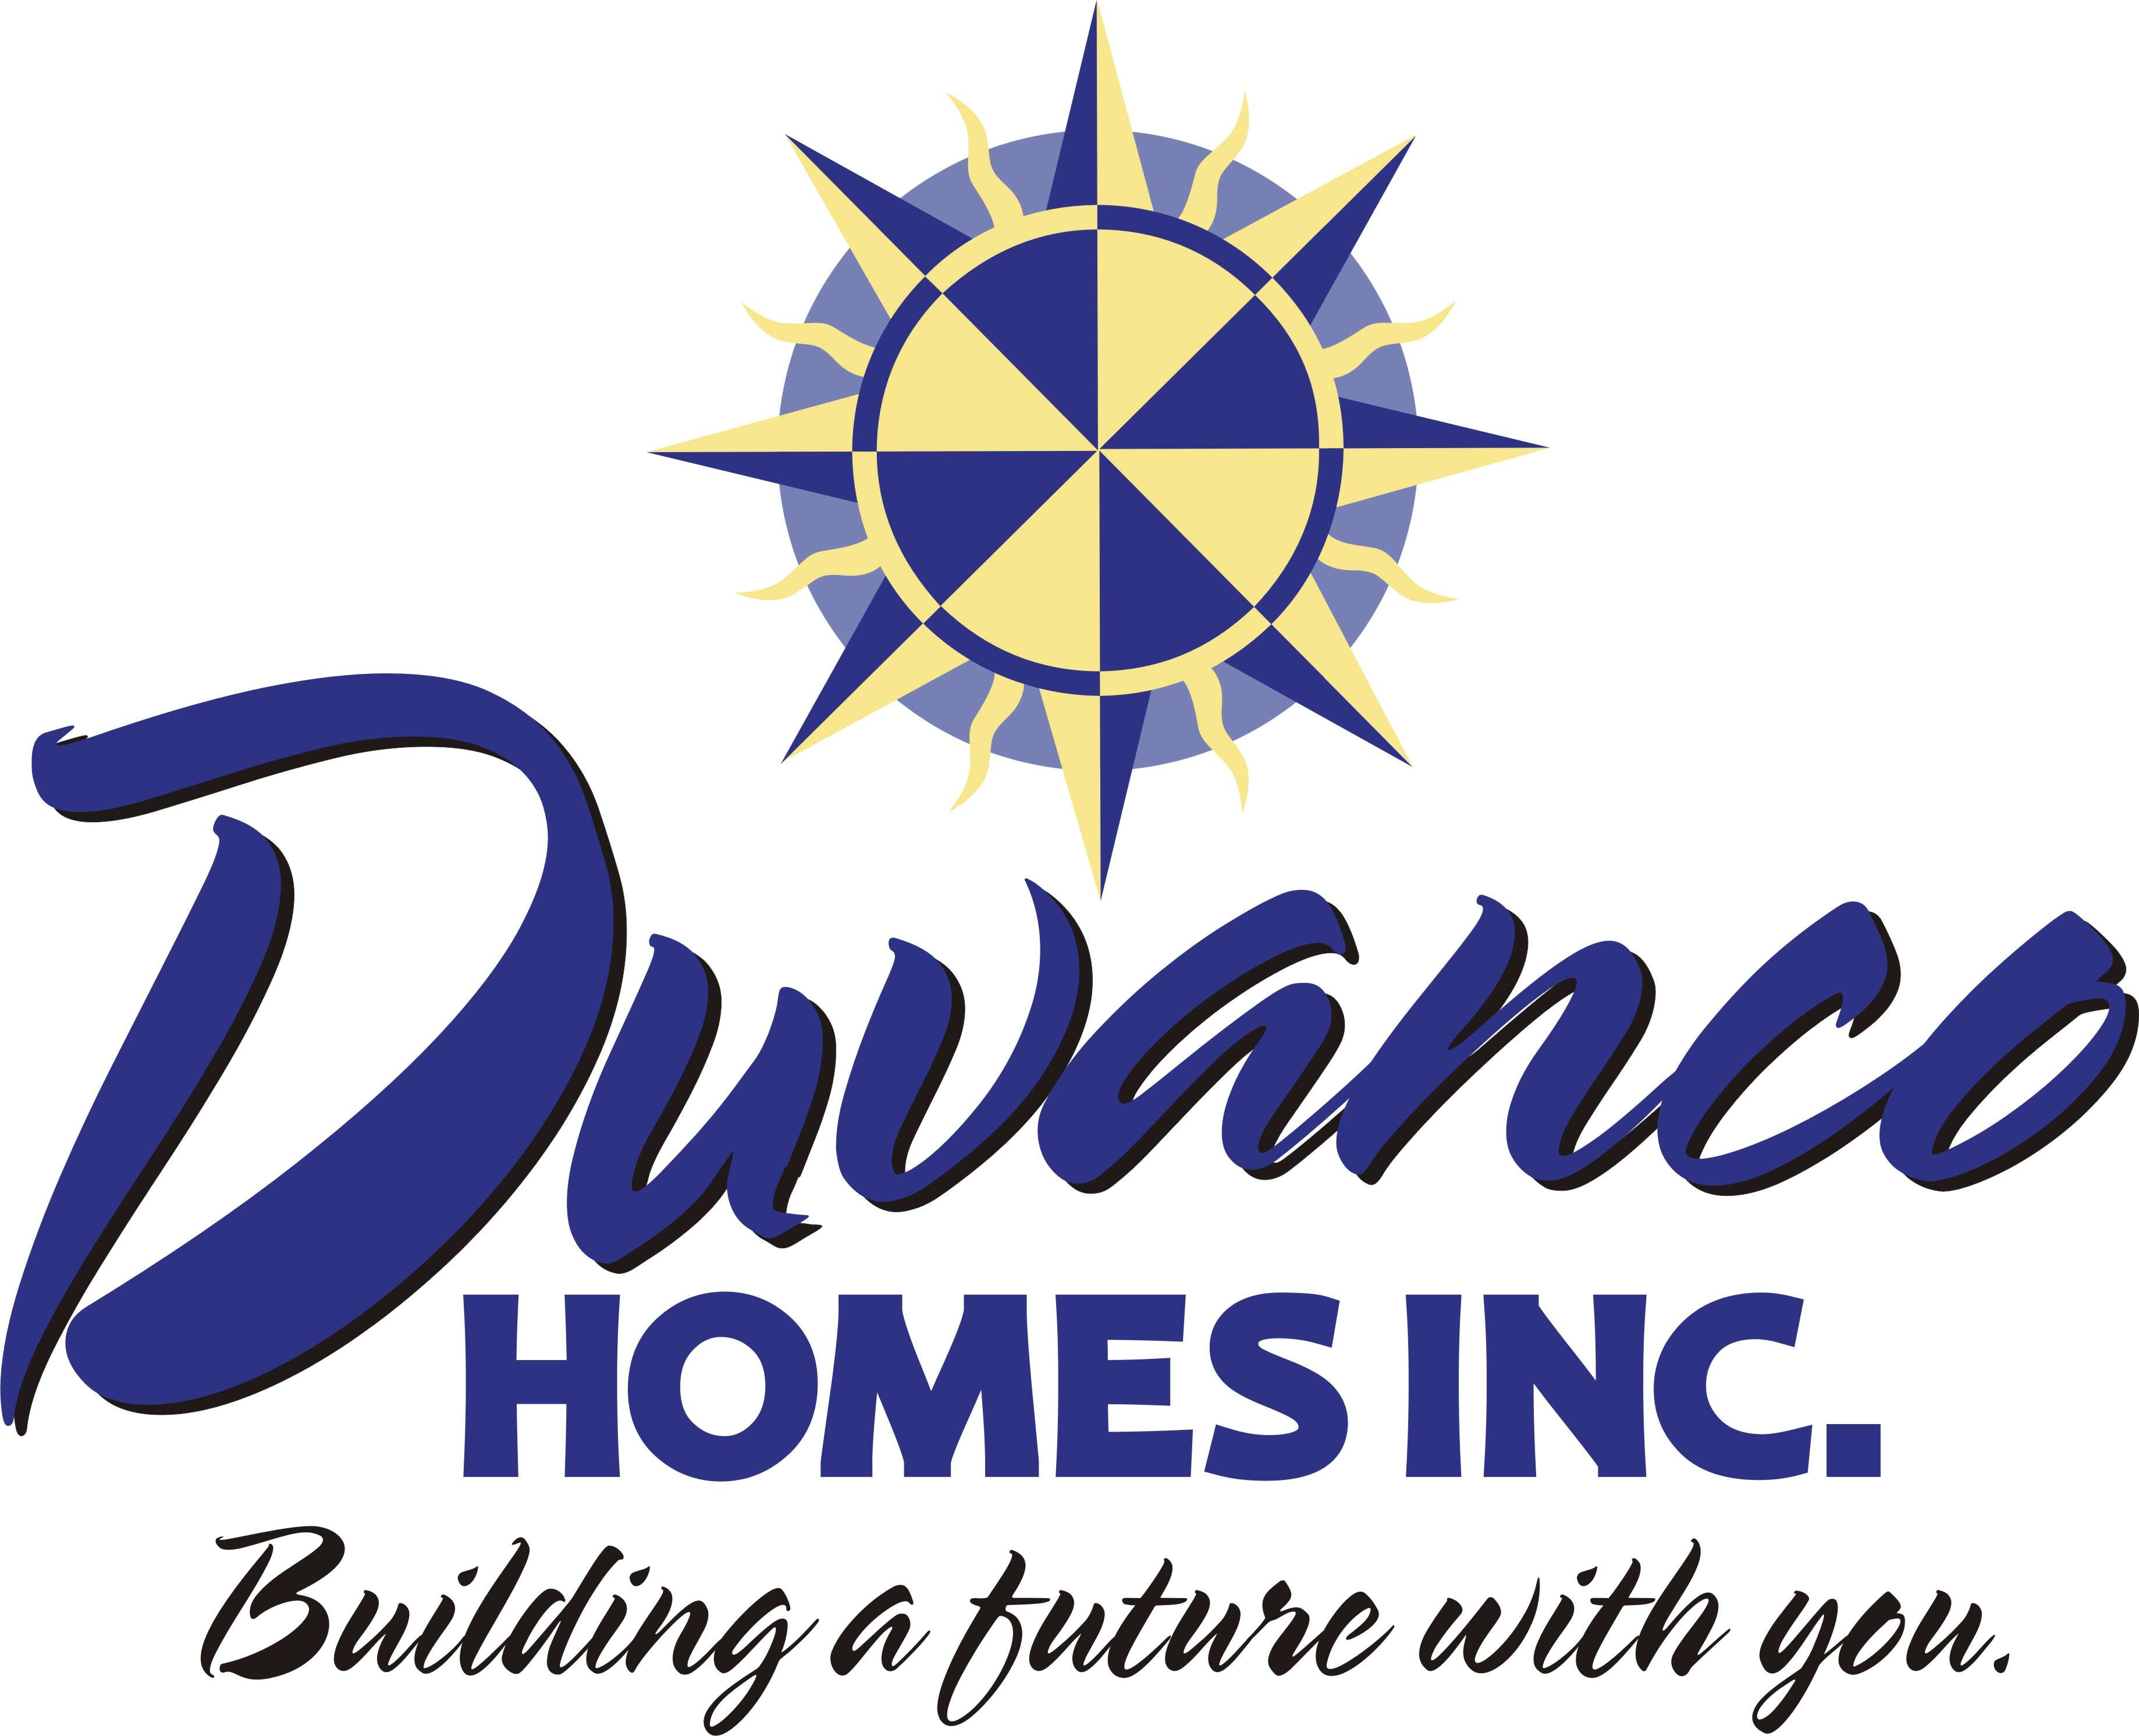 Duvanco Homes Inc.